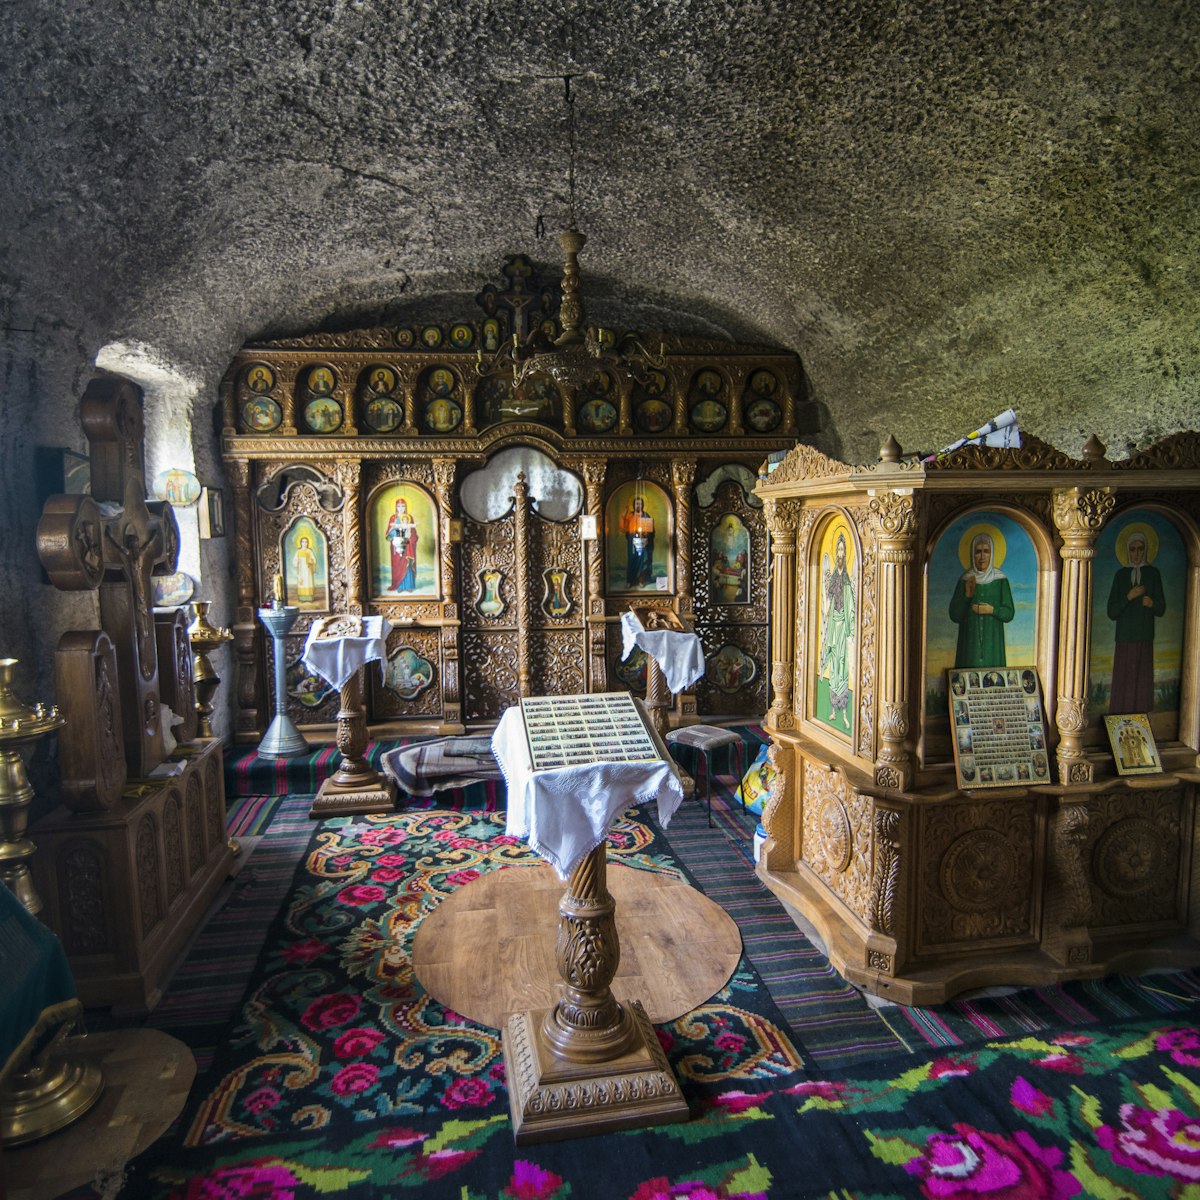 Cave monastery in the historical temple complex of old Orhei (Orheiul Vechi), Moldova, Europe